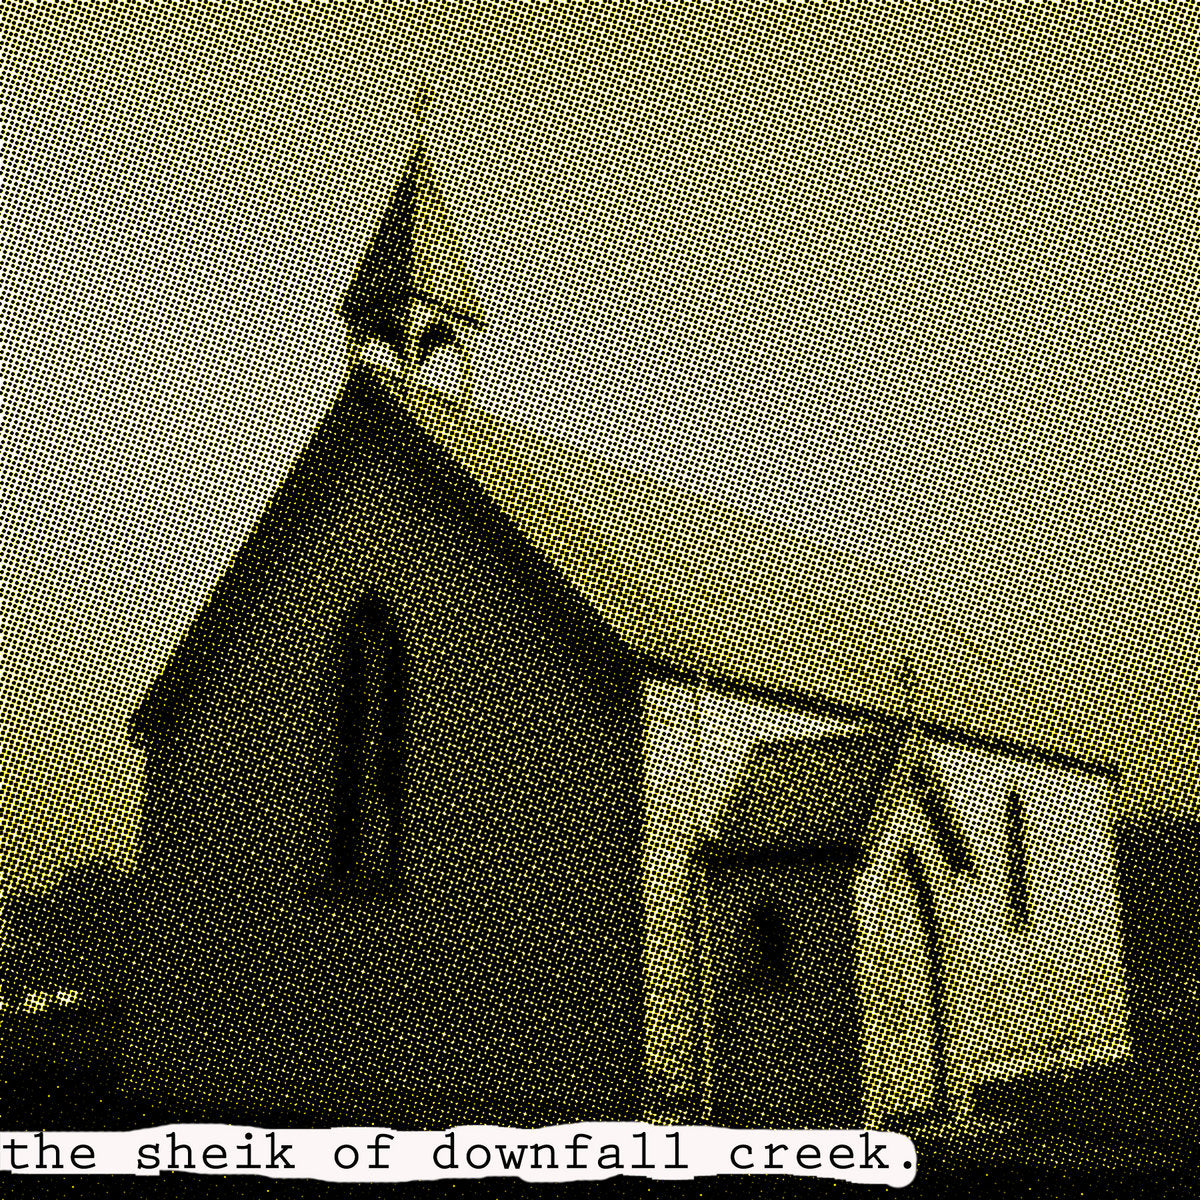 Papa Lord God - The Sheik of Downfall Creek LP